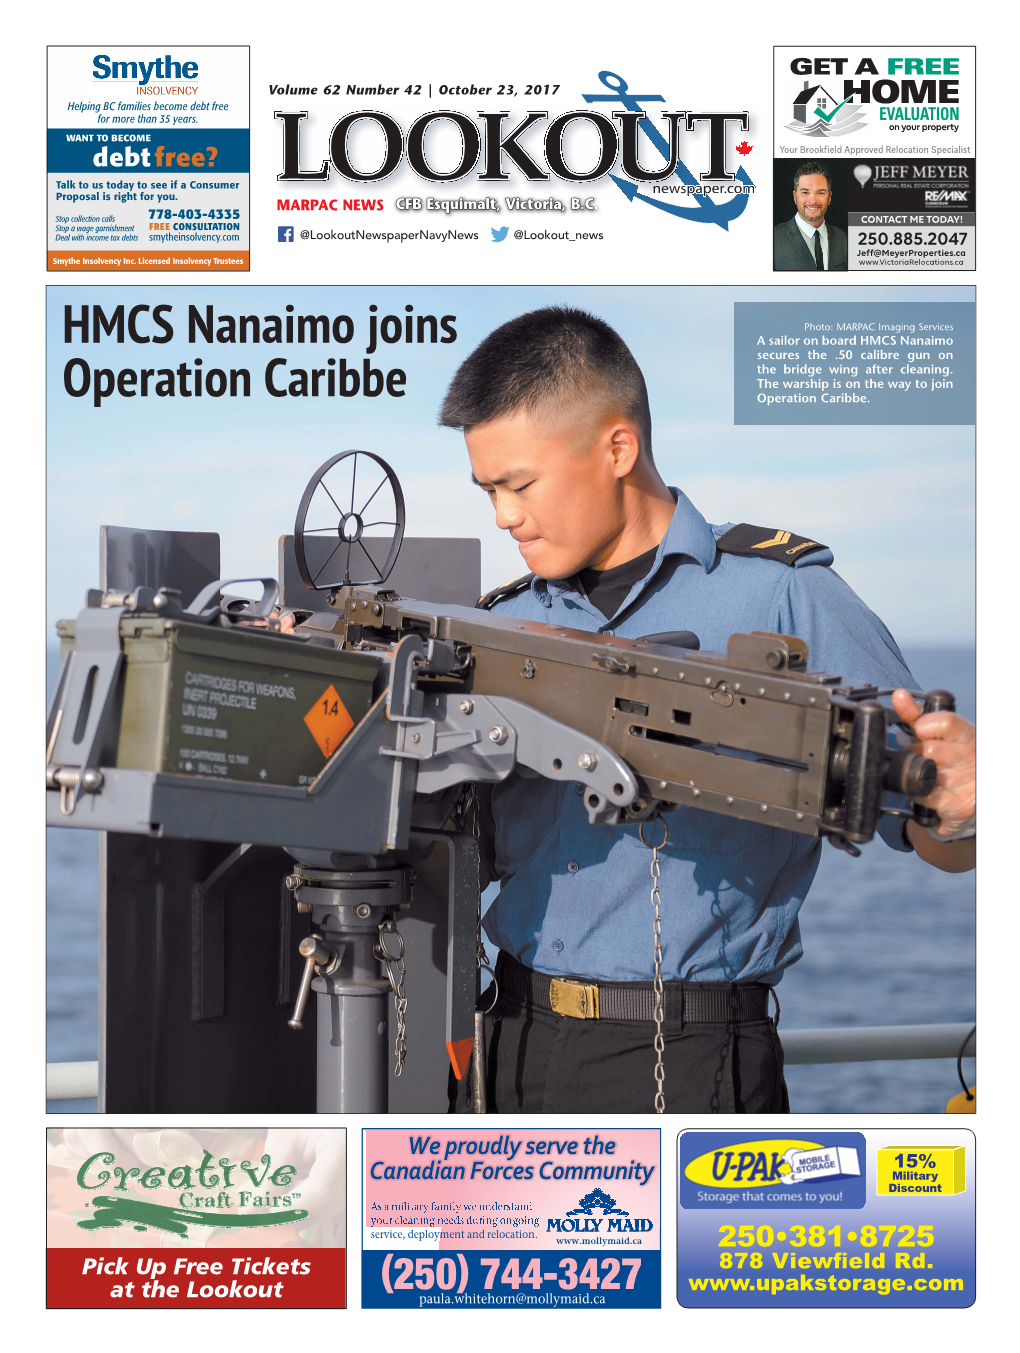 HMCS Nanaimo Joins Operation Caribbe